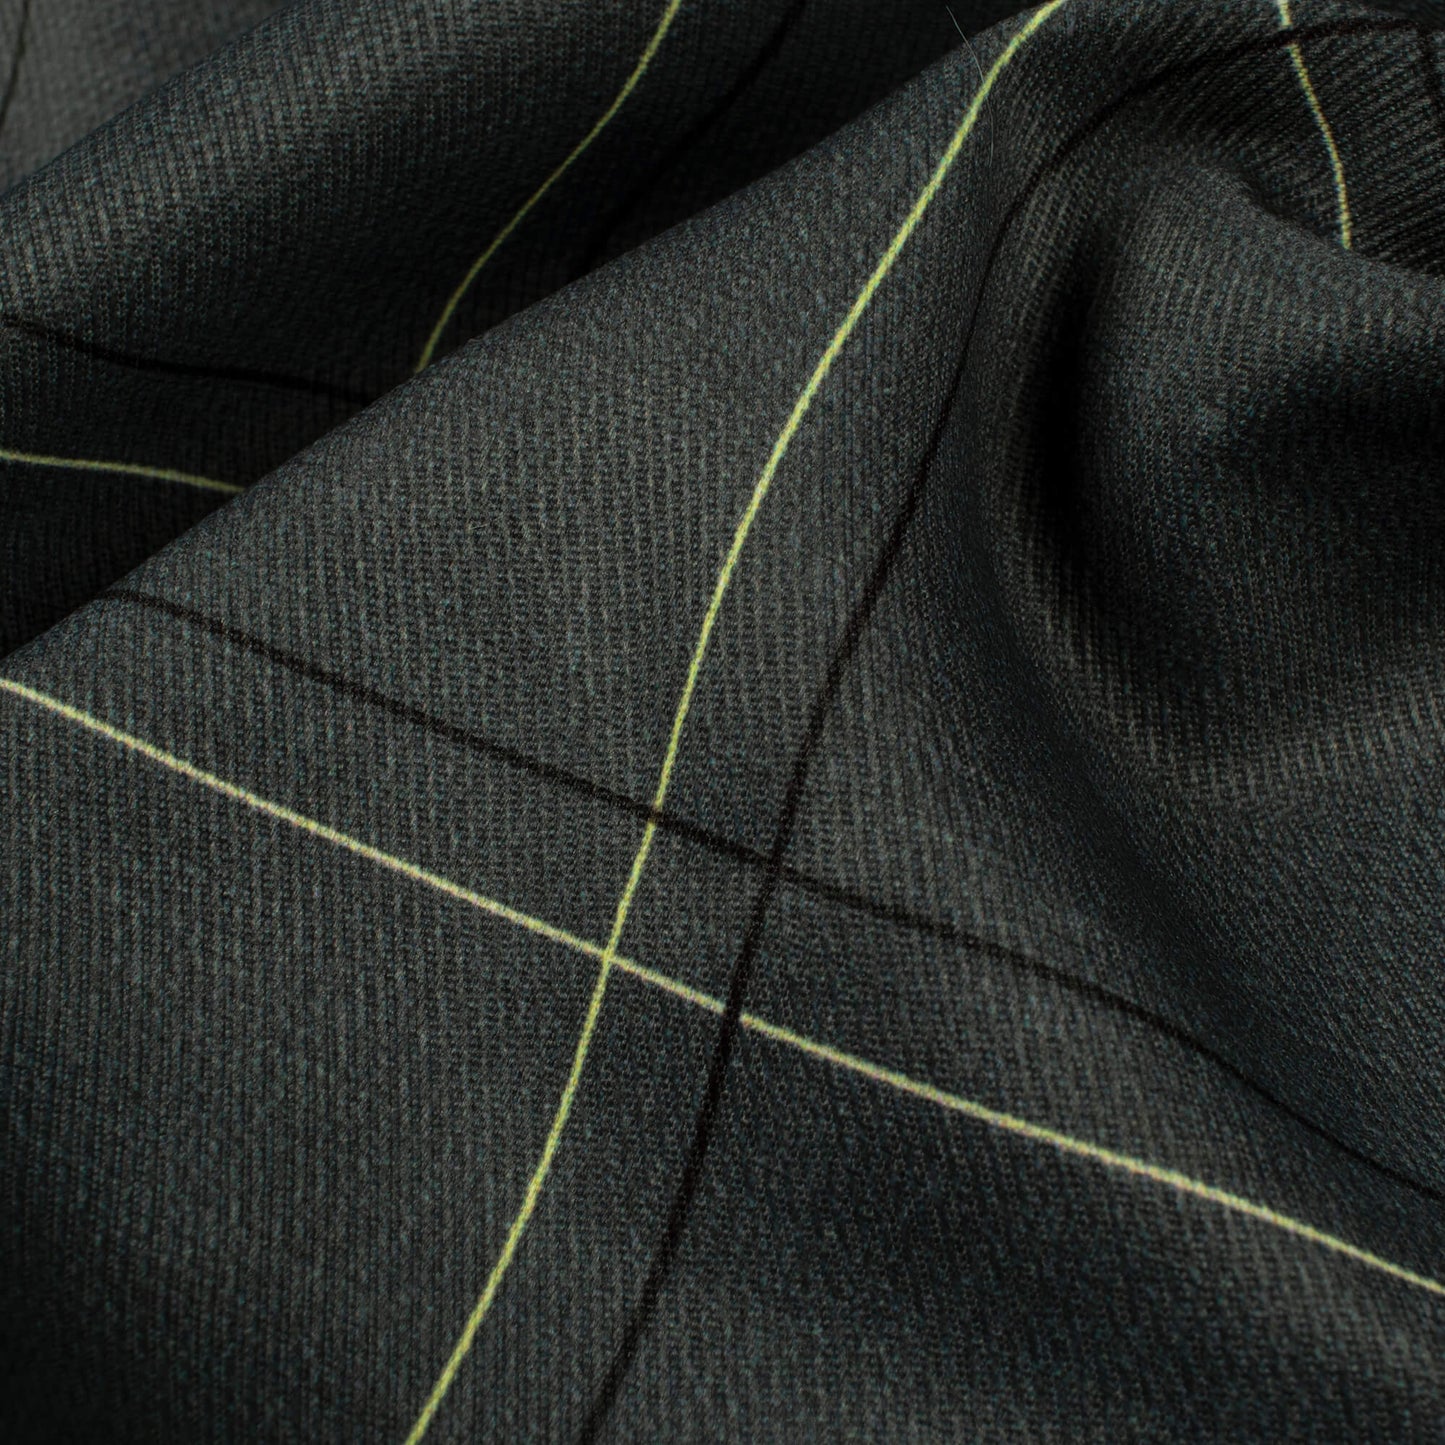 Slate Grey And Corn Yellow Checks Pattern Digital Print Twill Fabric (Width 56 Inches)